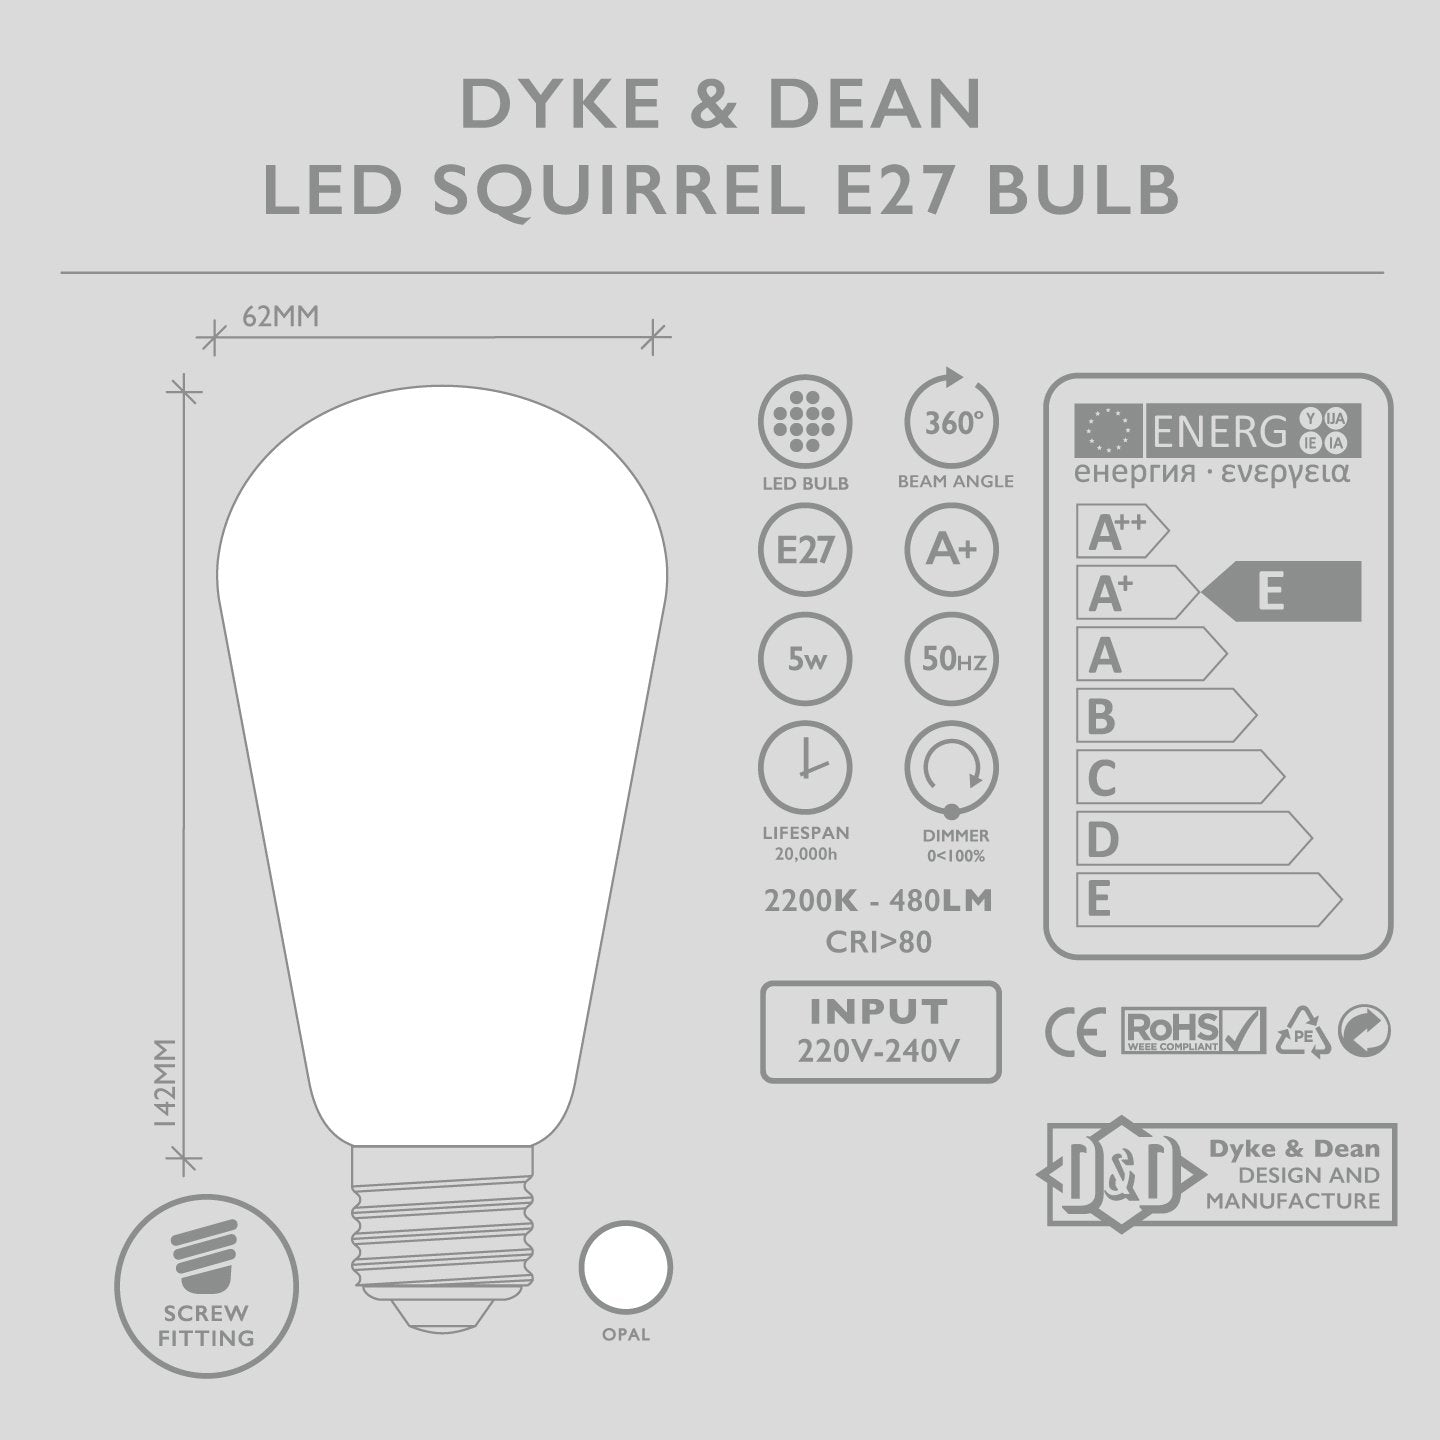 DYKE & DEAN LED OPAL SQUIRREL E27 BULB - DYKE & DEAN